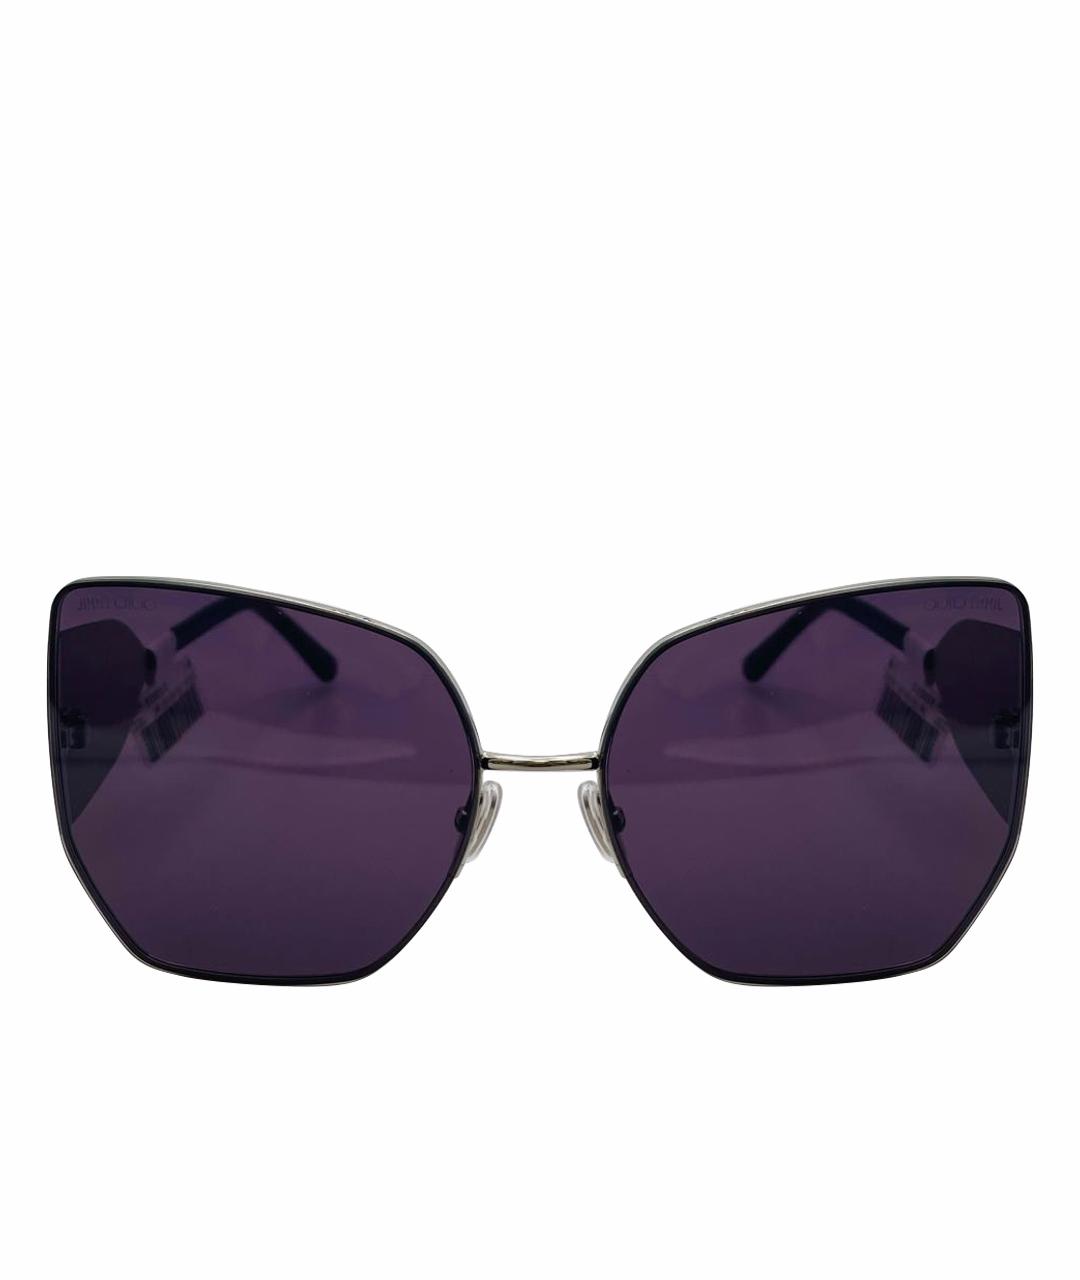 JIMMY CHOO Фиолетовые металлические солнцезащитные очки, фото 1